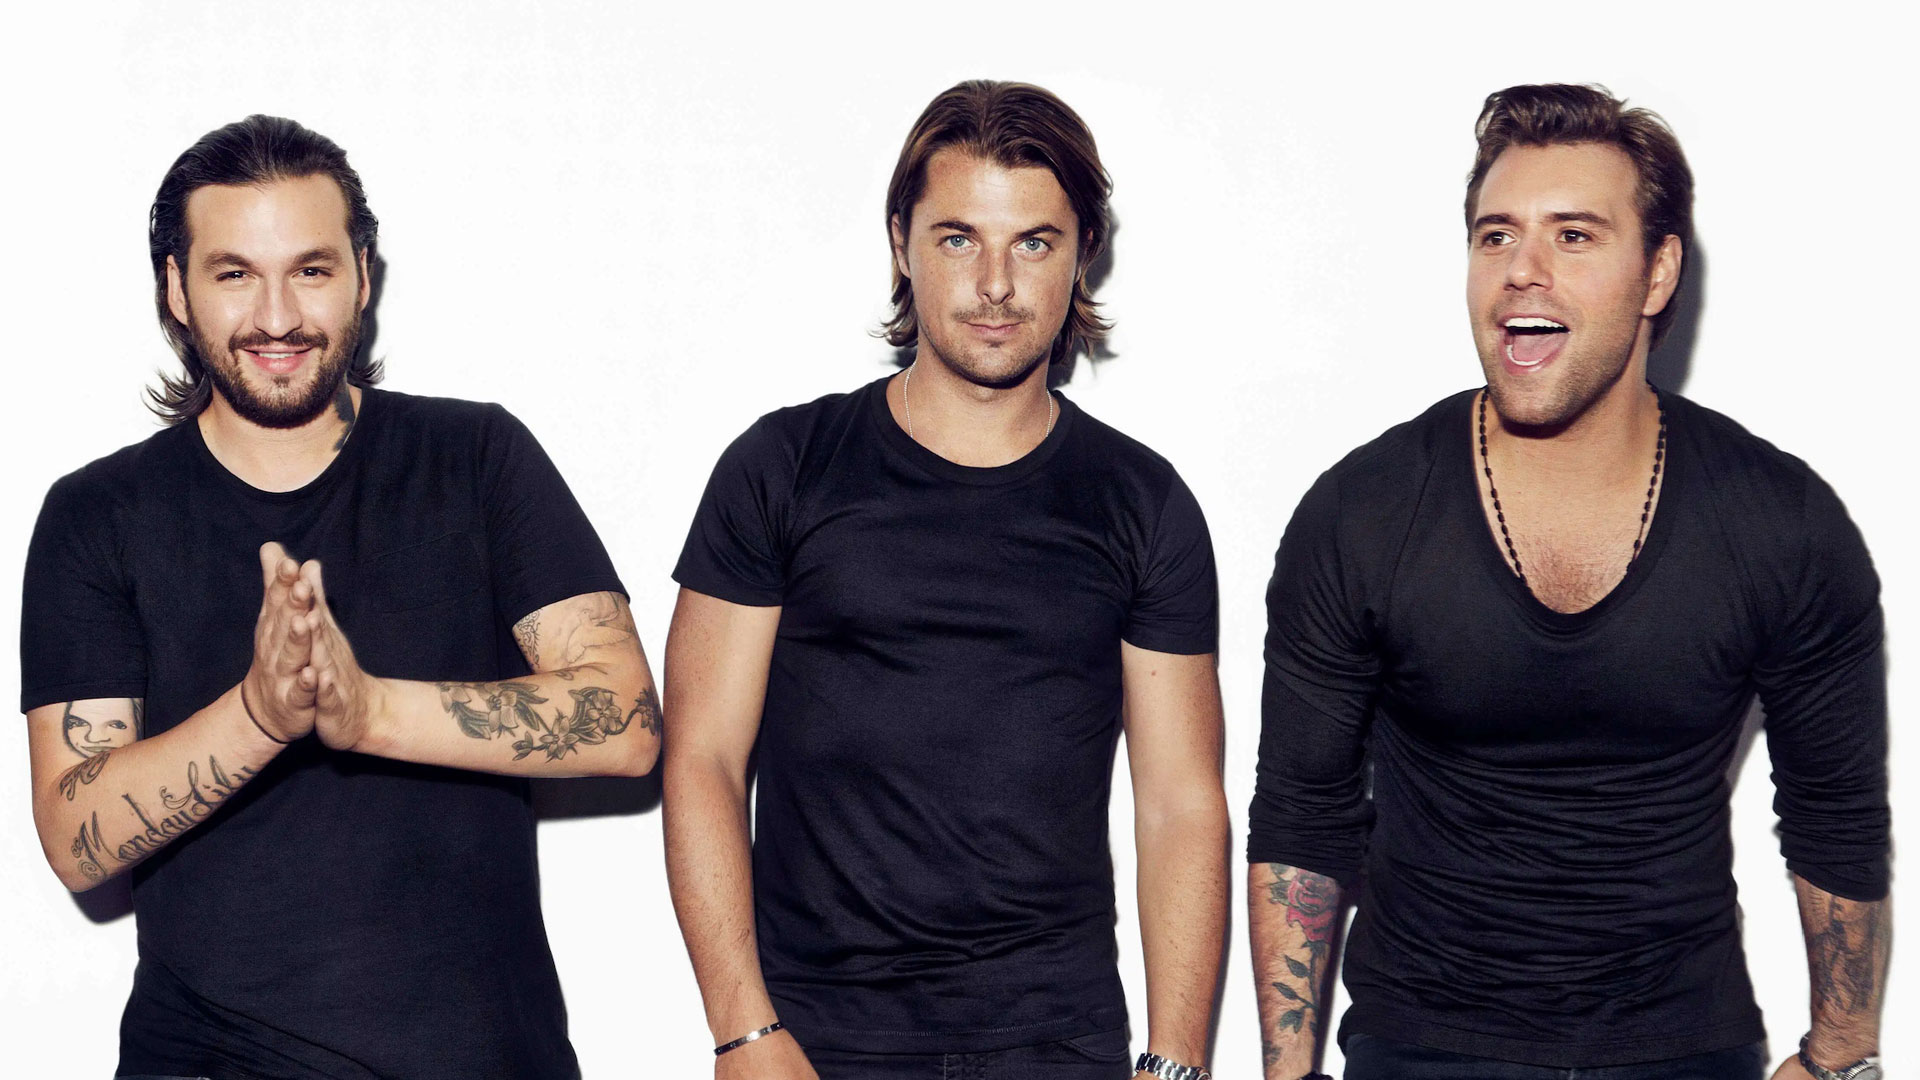 Swedish DJs & producers Steve Angello, Sebastian Ingrosso, Axwell Hedfors aka the Swedish House Mafia